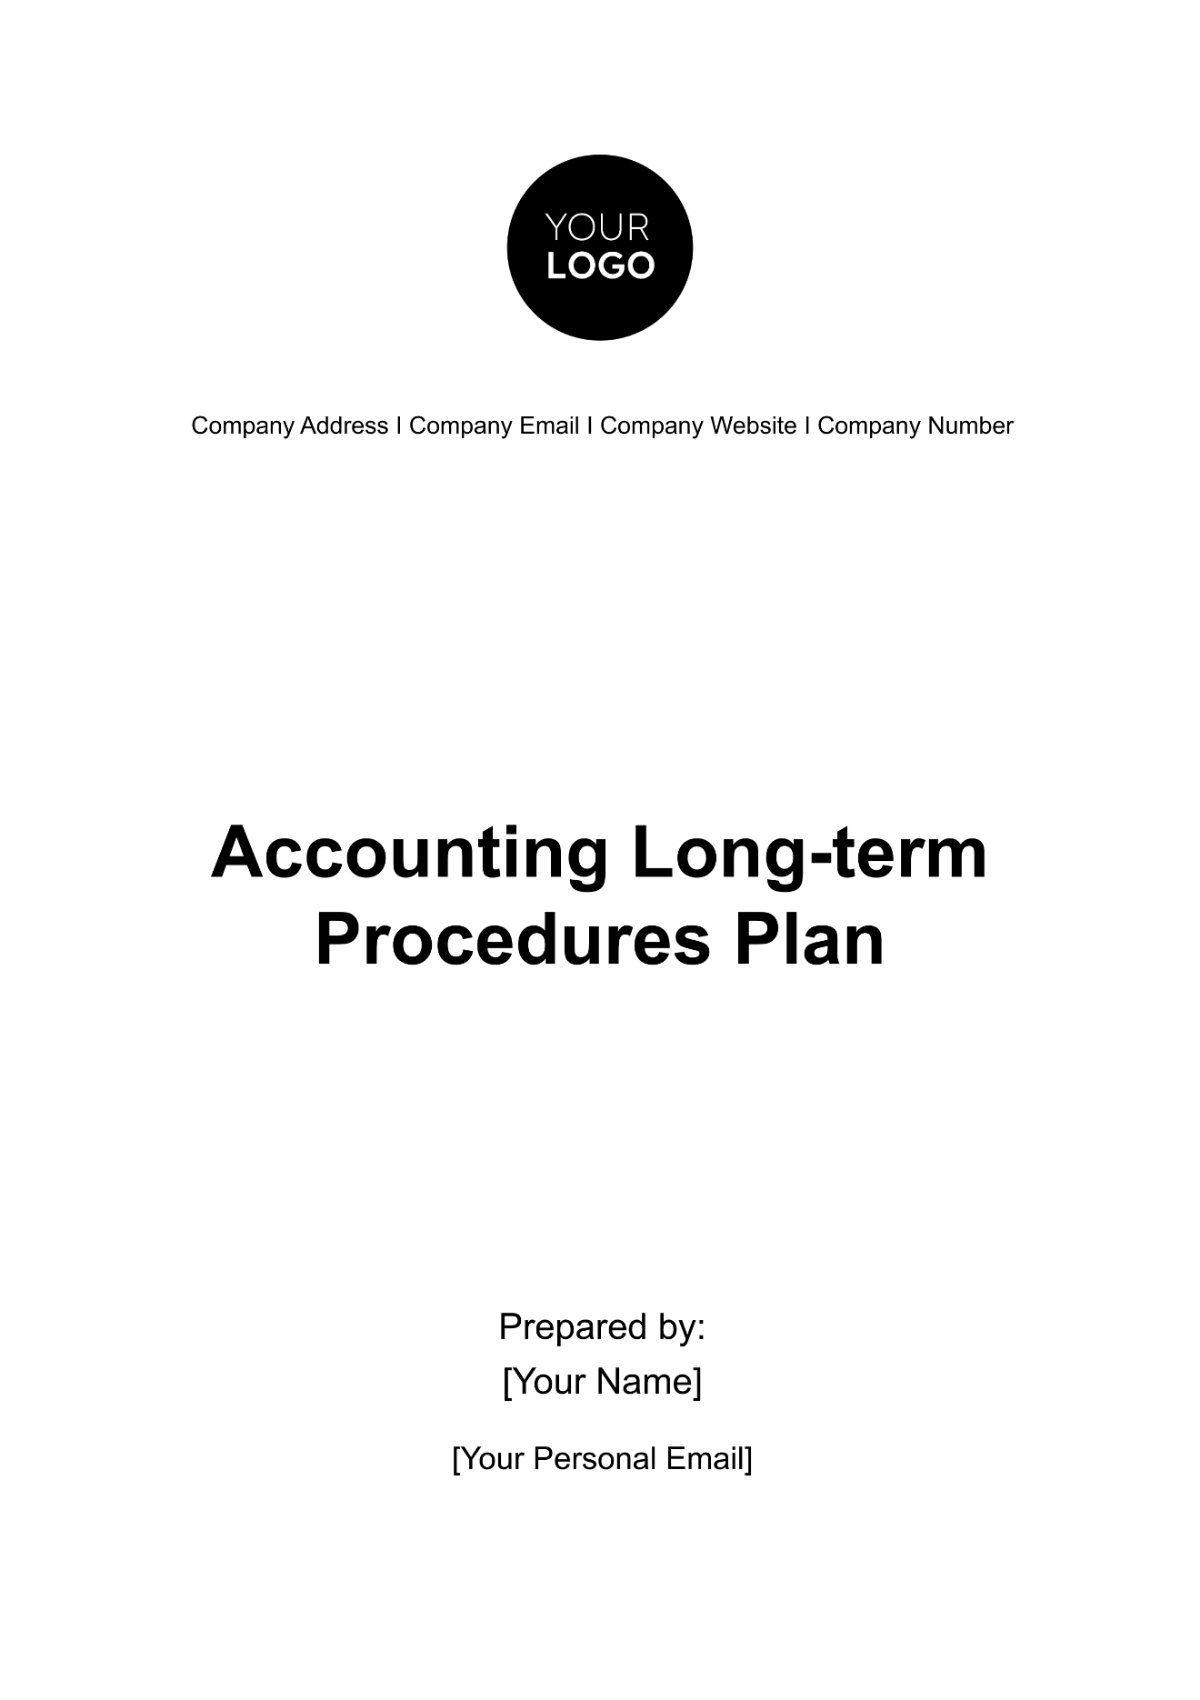 Accounting Long-term Procedures Plan Template